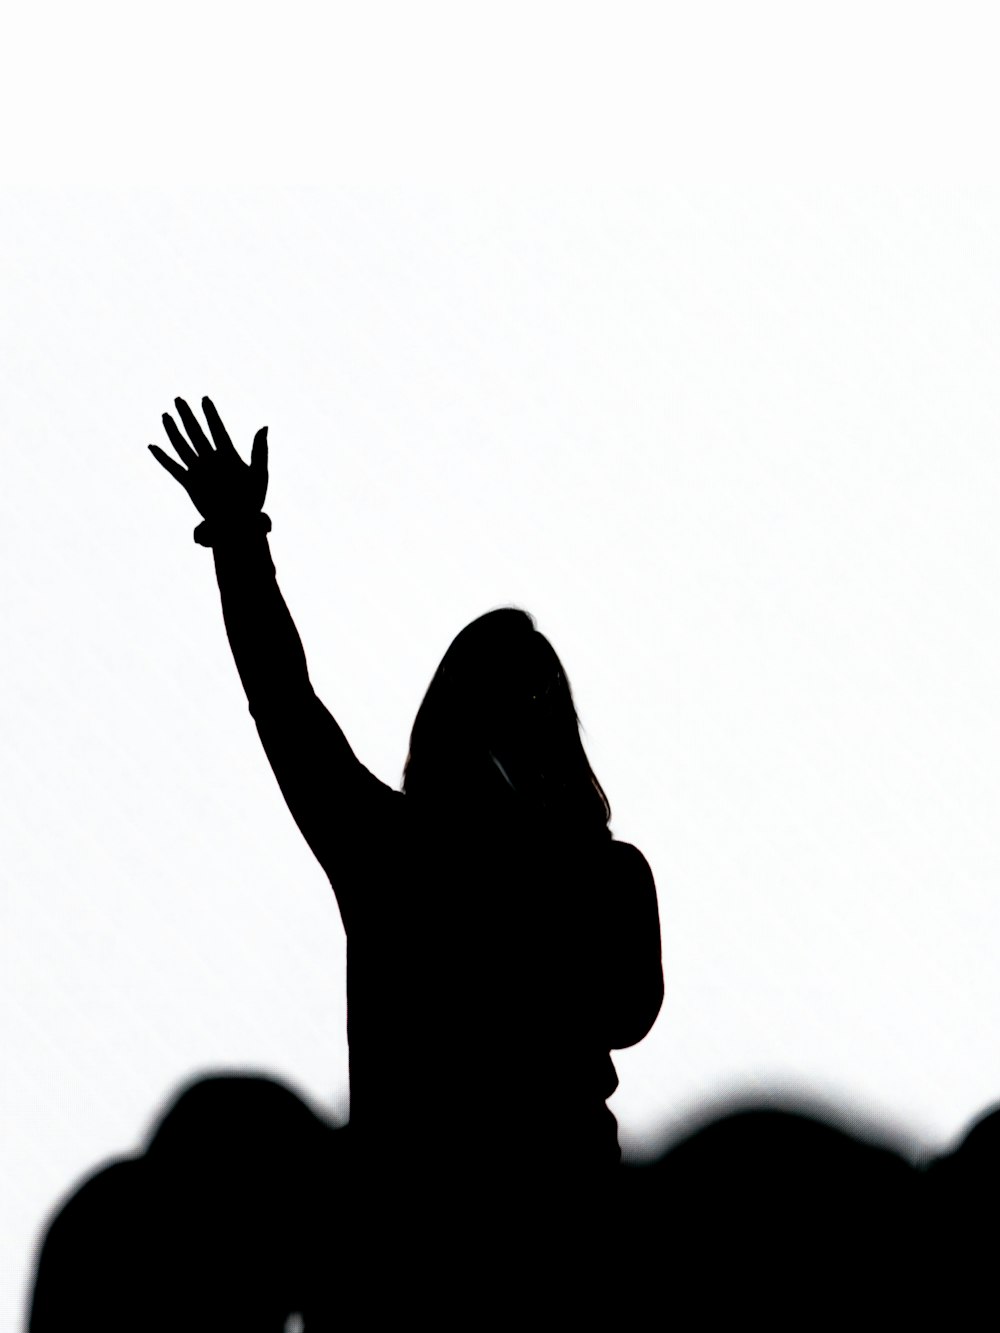 silueta de persona levantando la mano